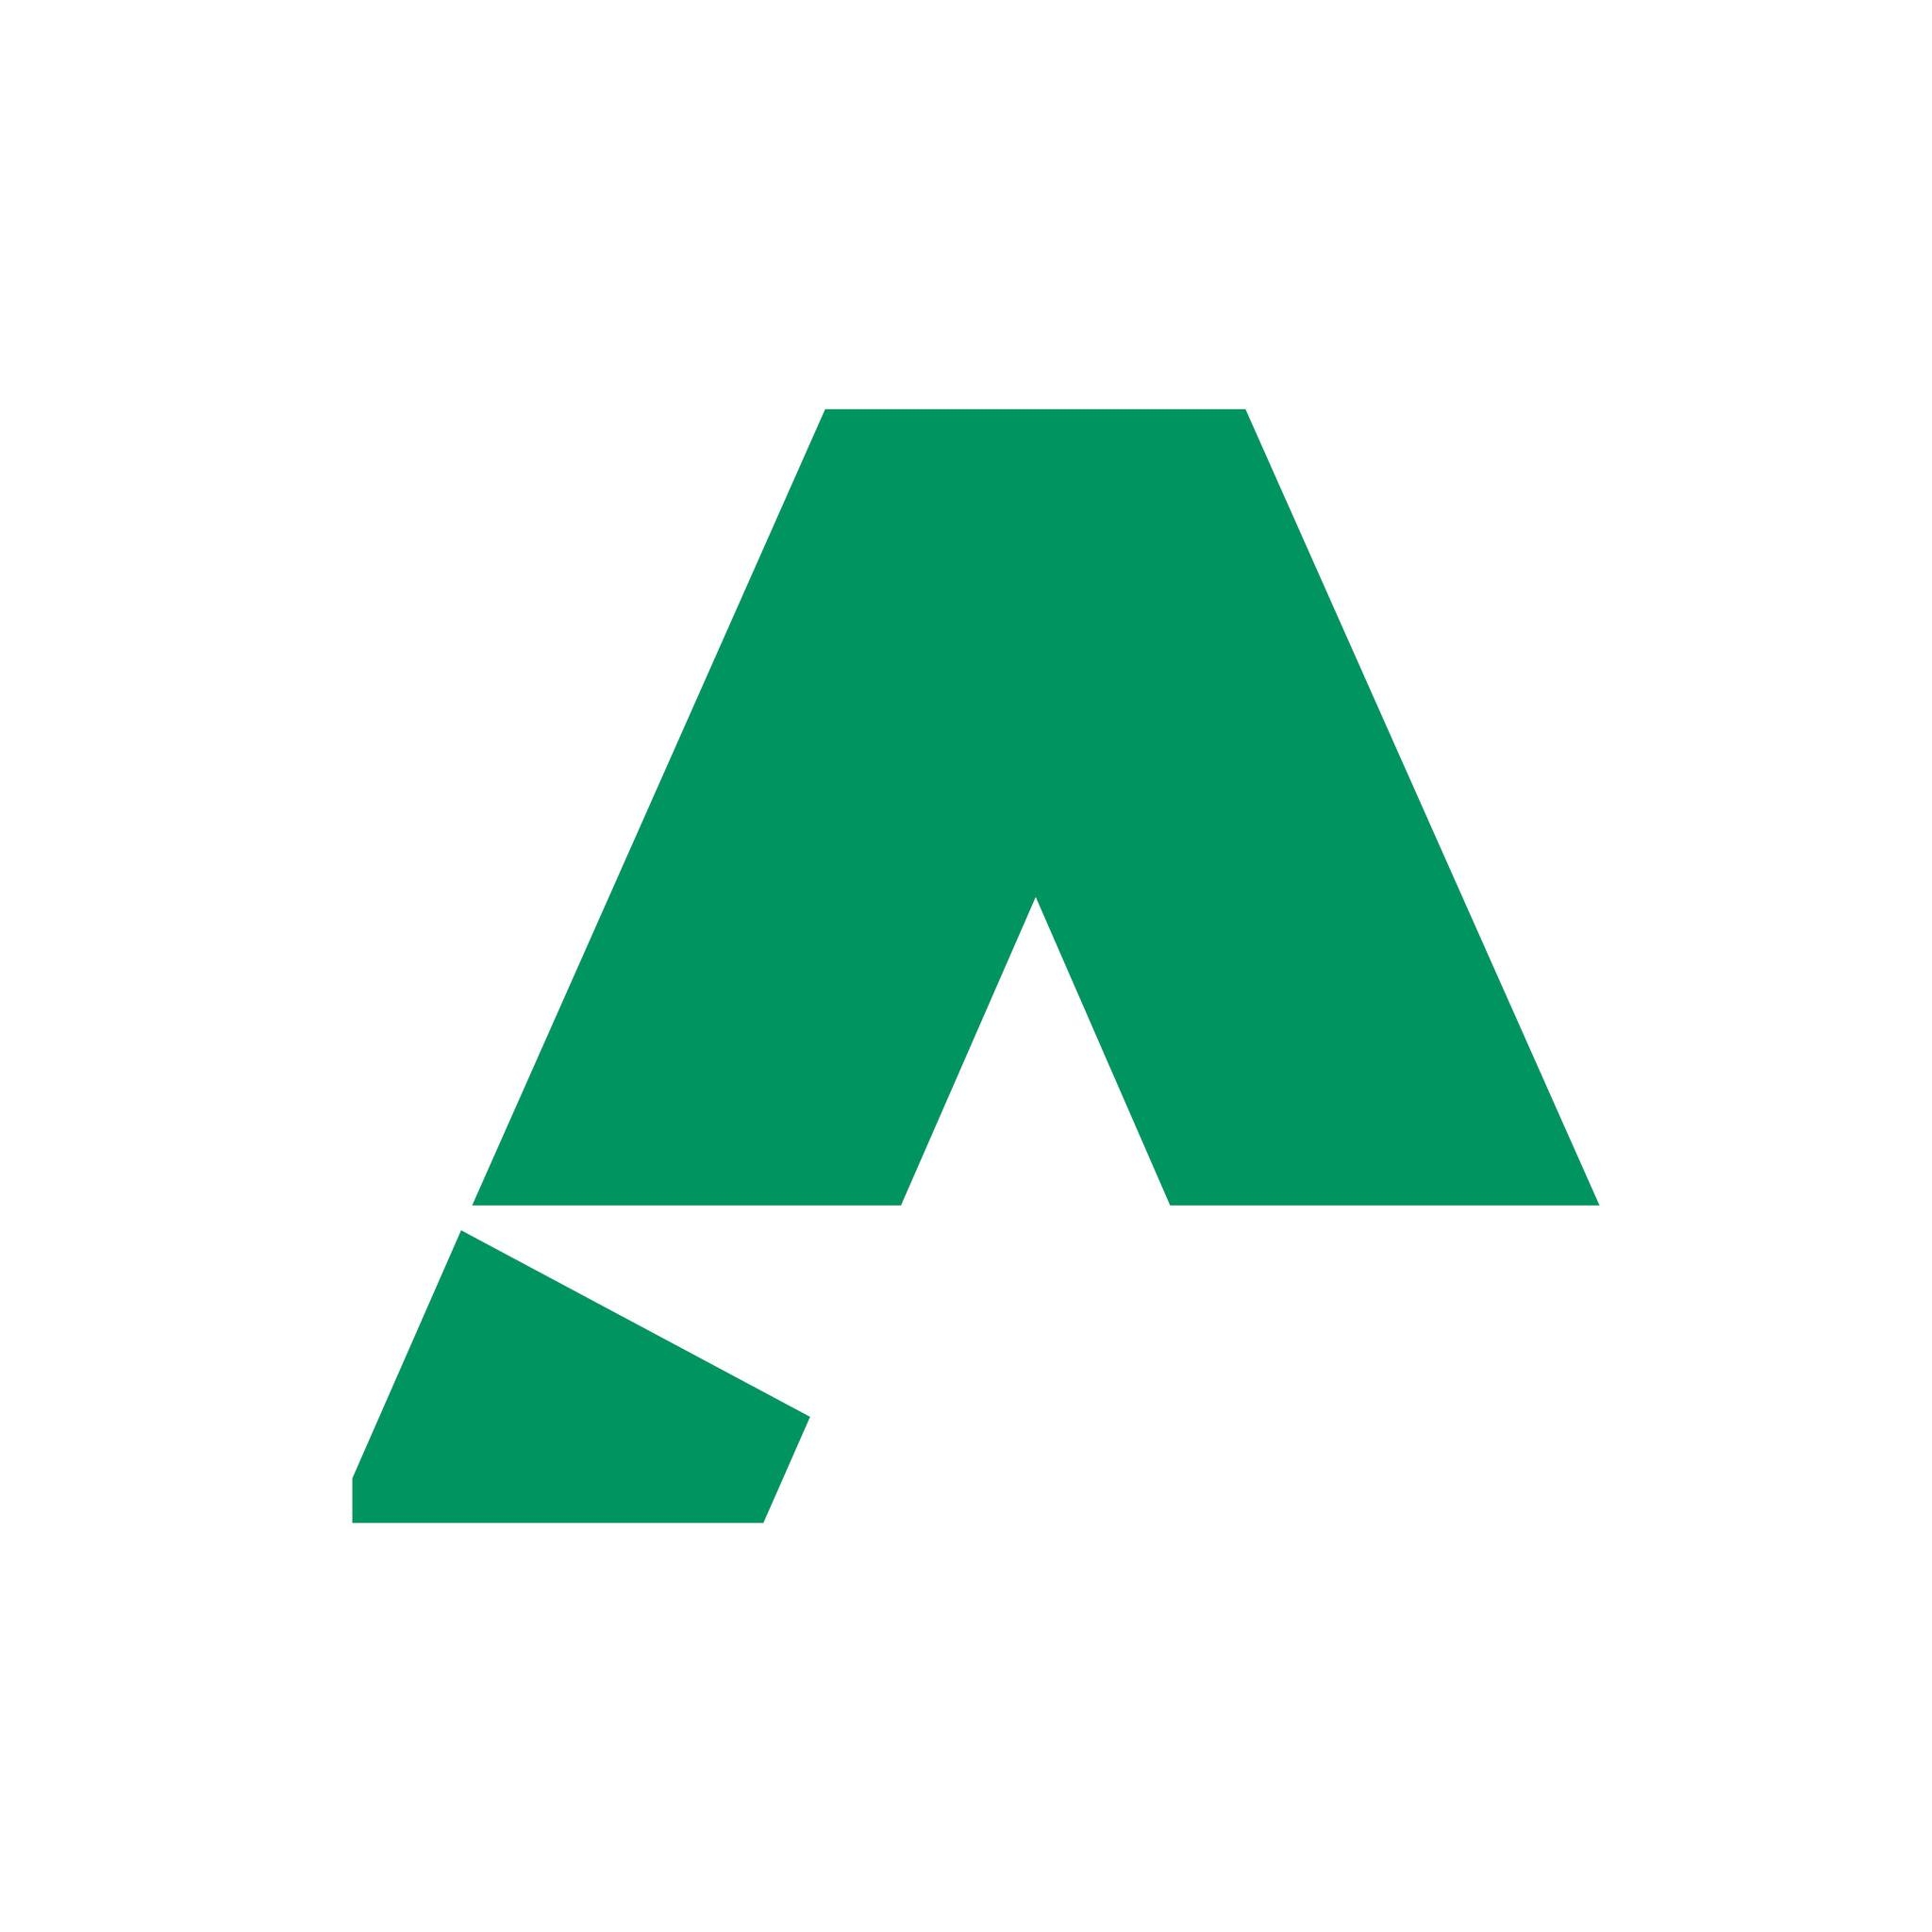 Alpha Metallurgical Resources Inc Logo